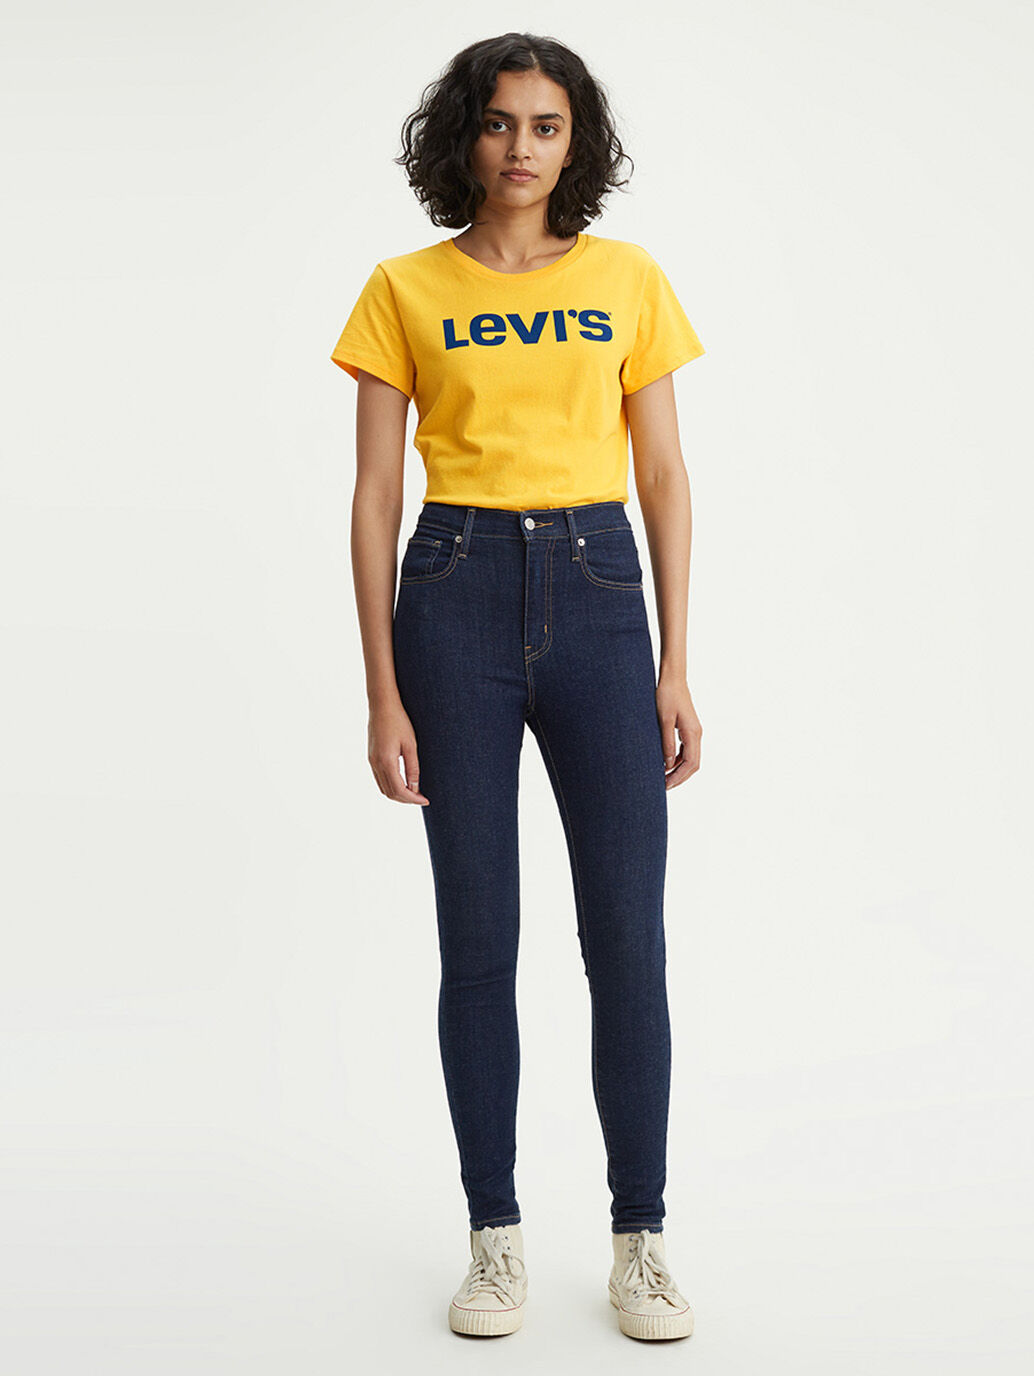 women's mile high levi jeans